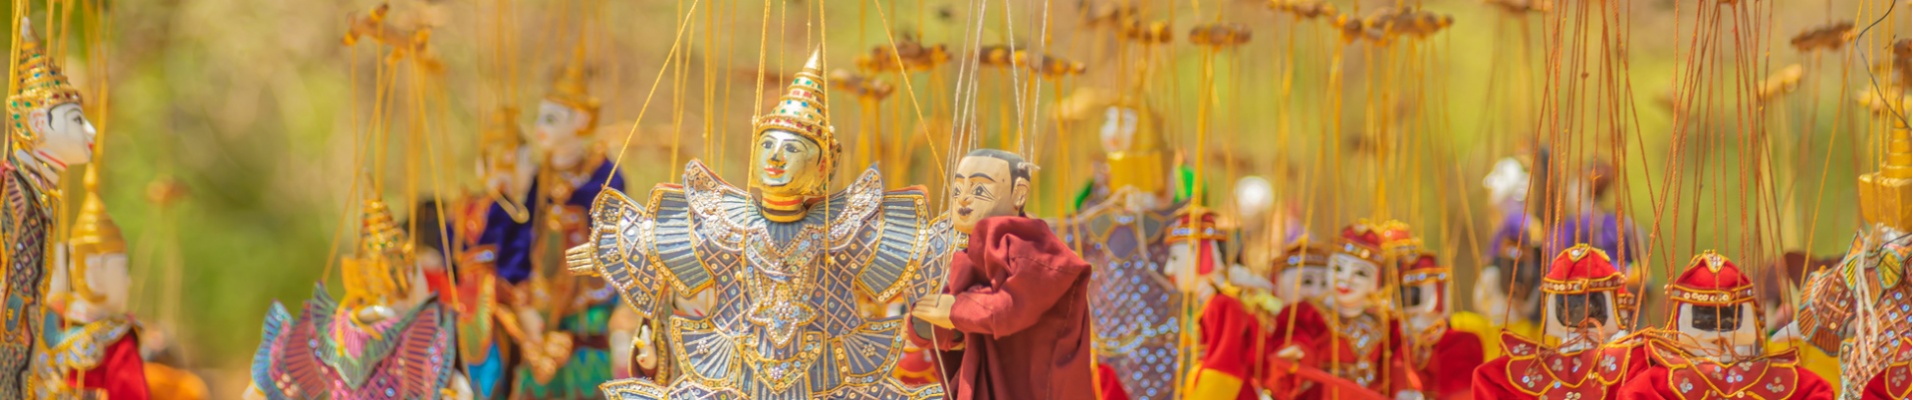 marionettes traditionelles, Bagan, Myanmar